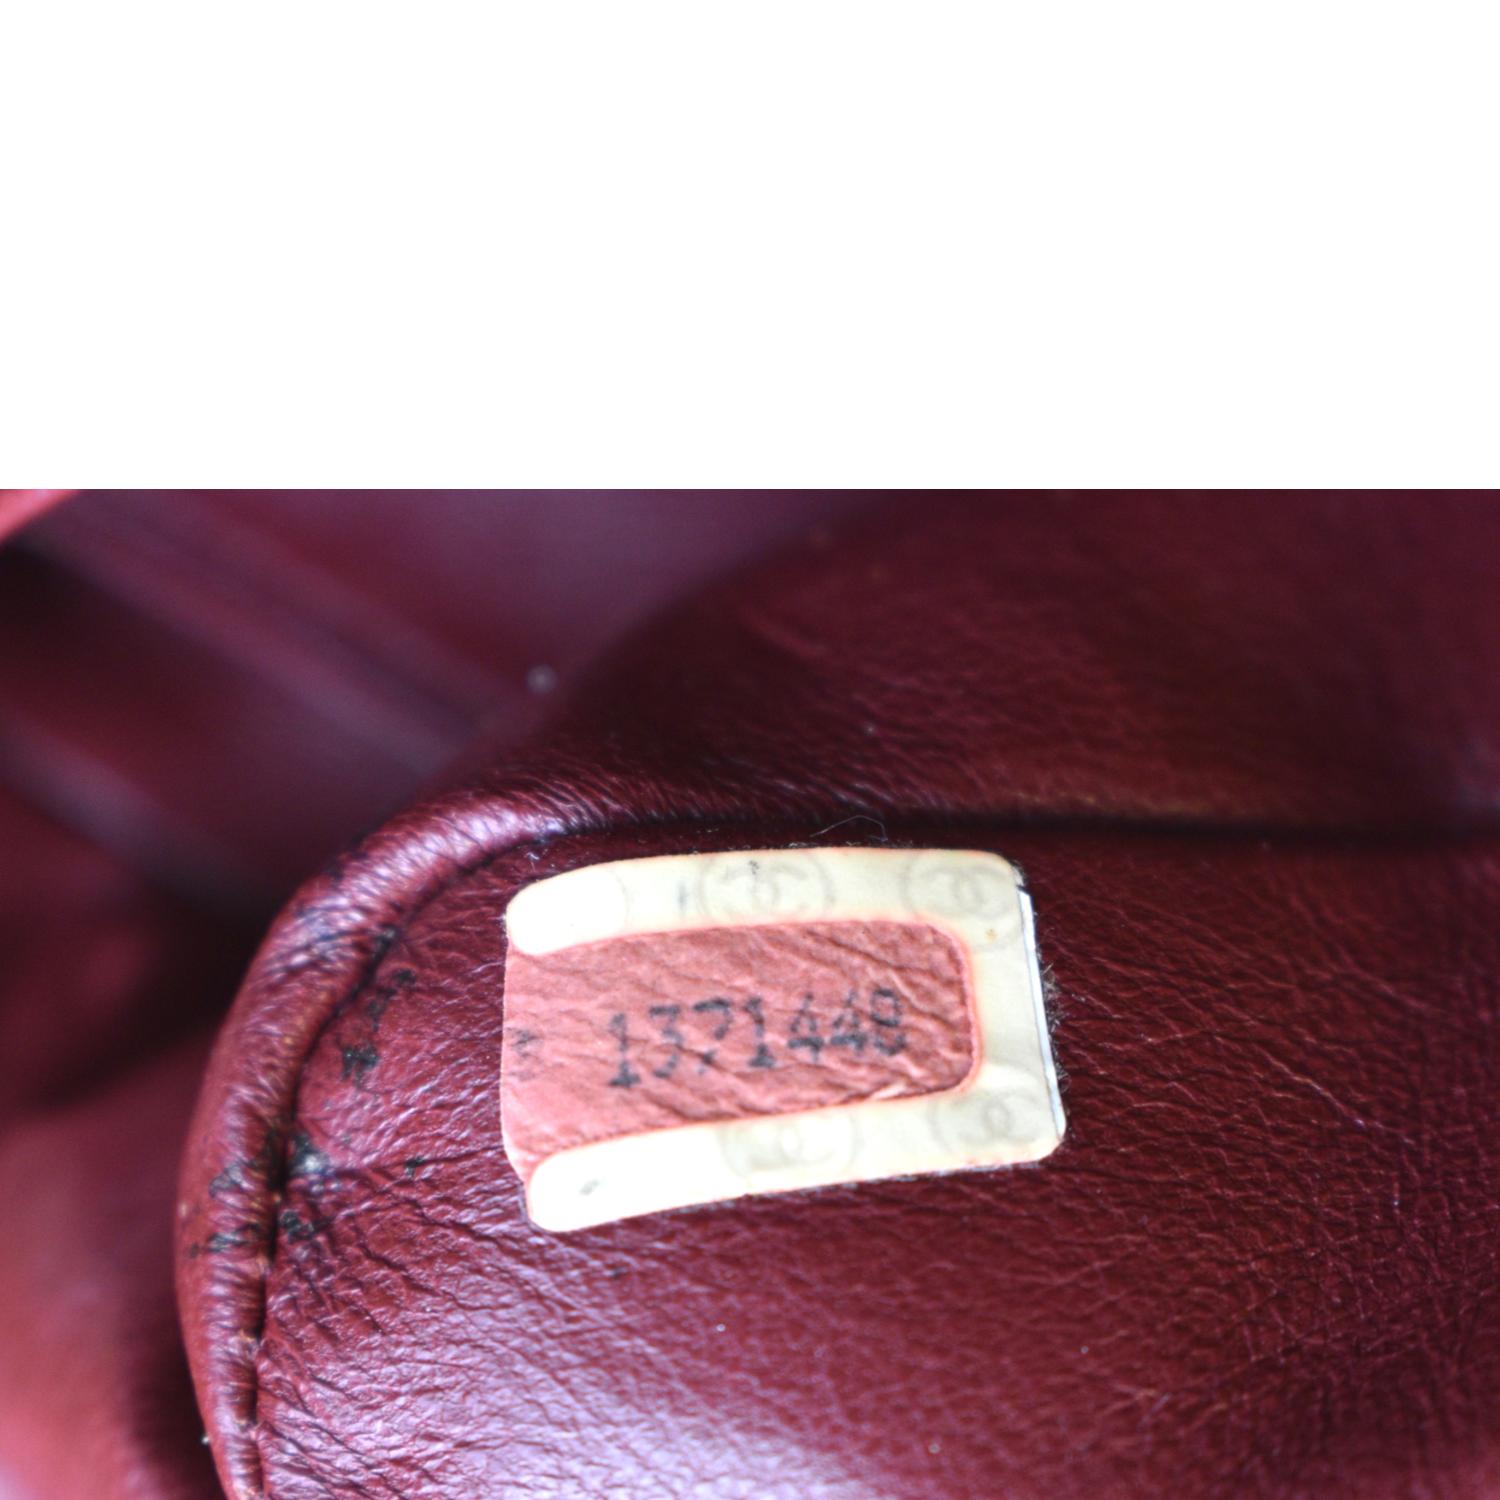 Chanel Classic Double Flap Medium Shoulder Bag Brown Lambskin